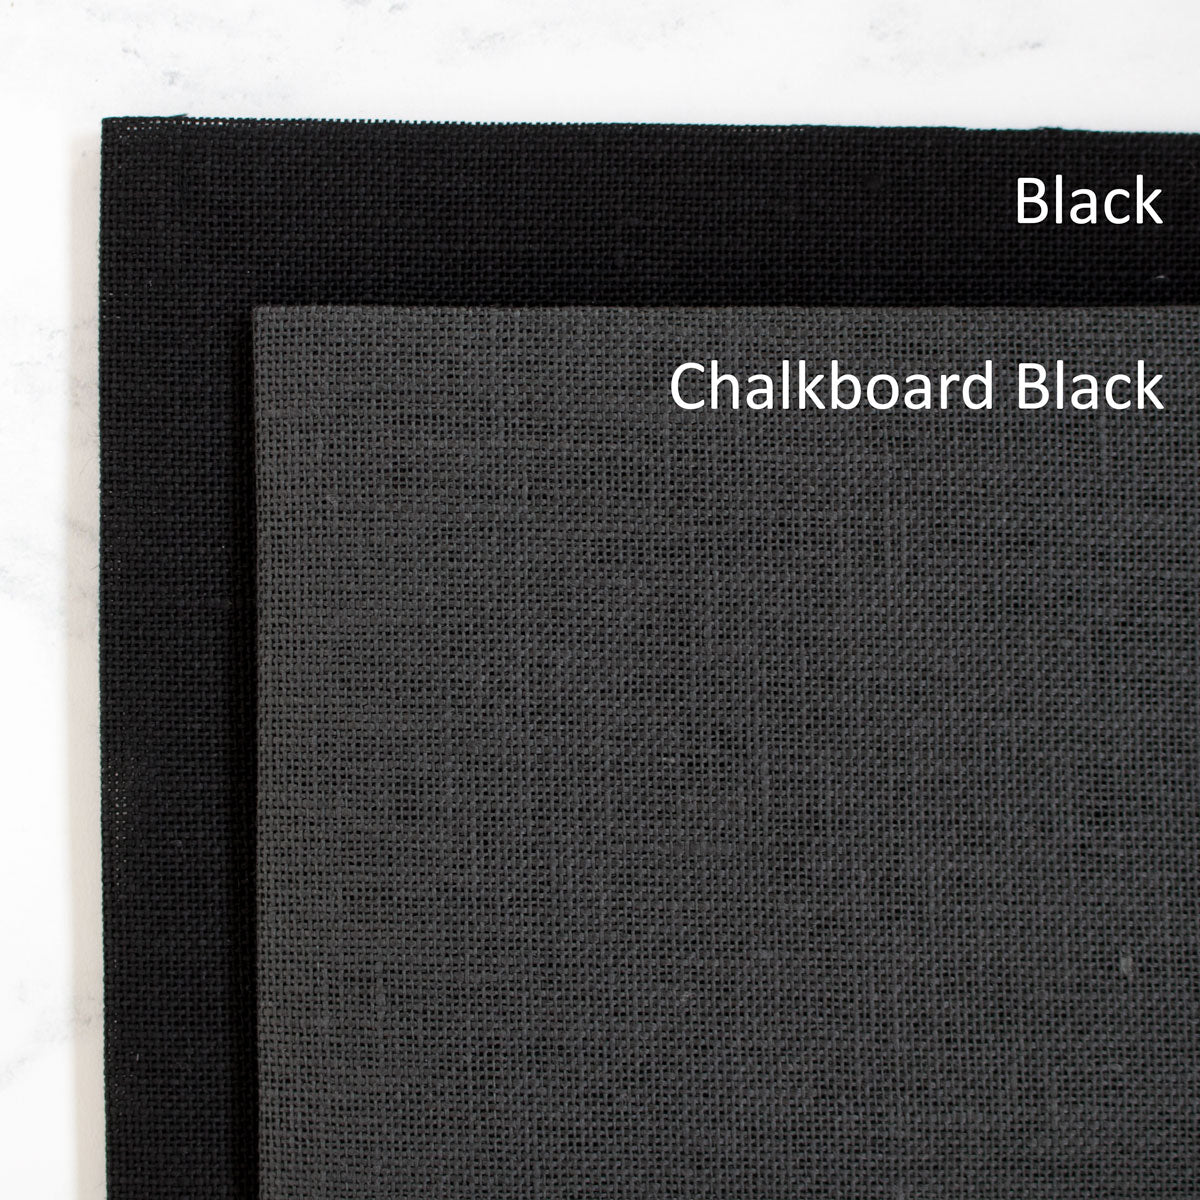 Chalkboard Black Linen Cross Stitch Fabric - 28 count - Stitched Modern